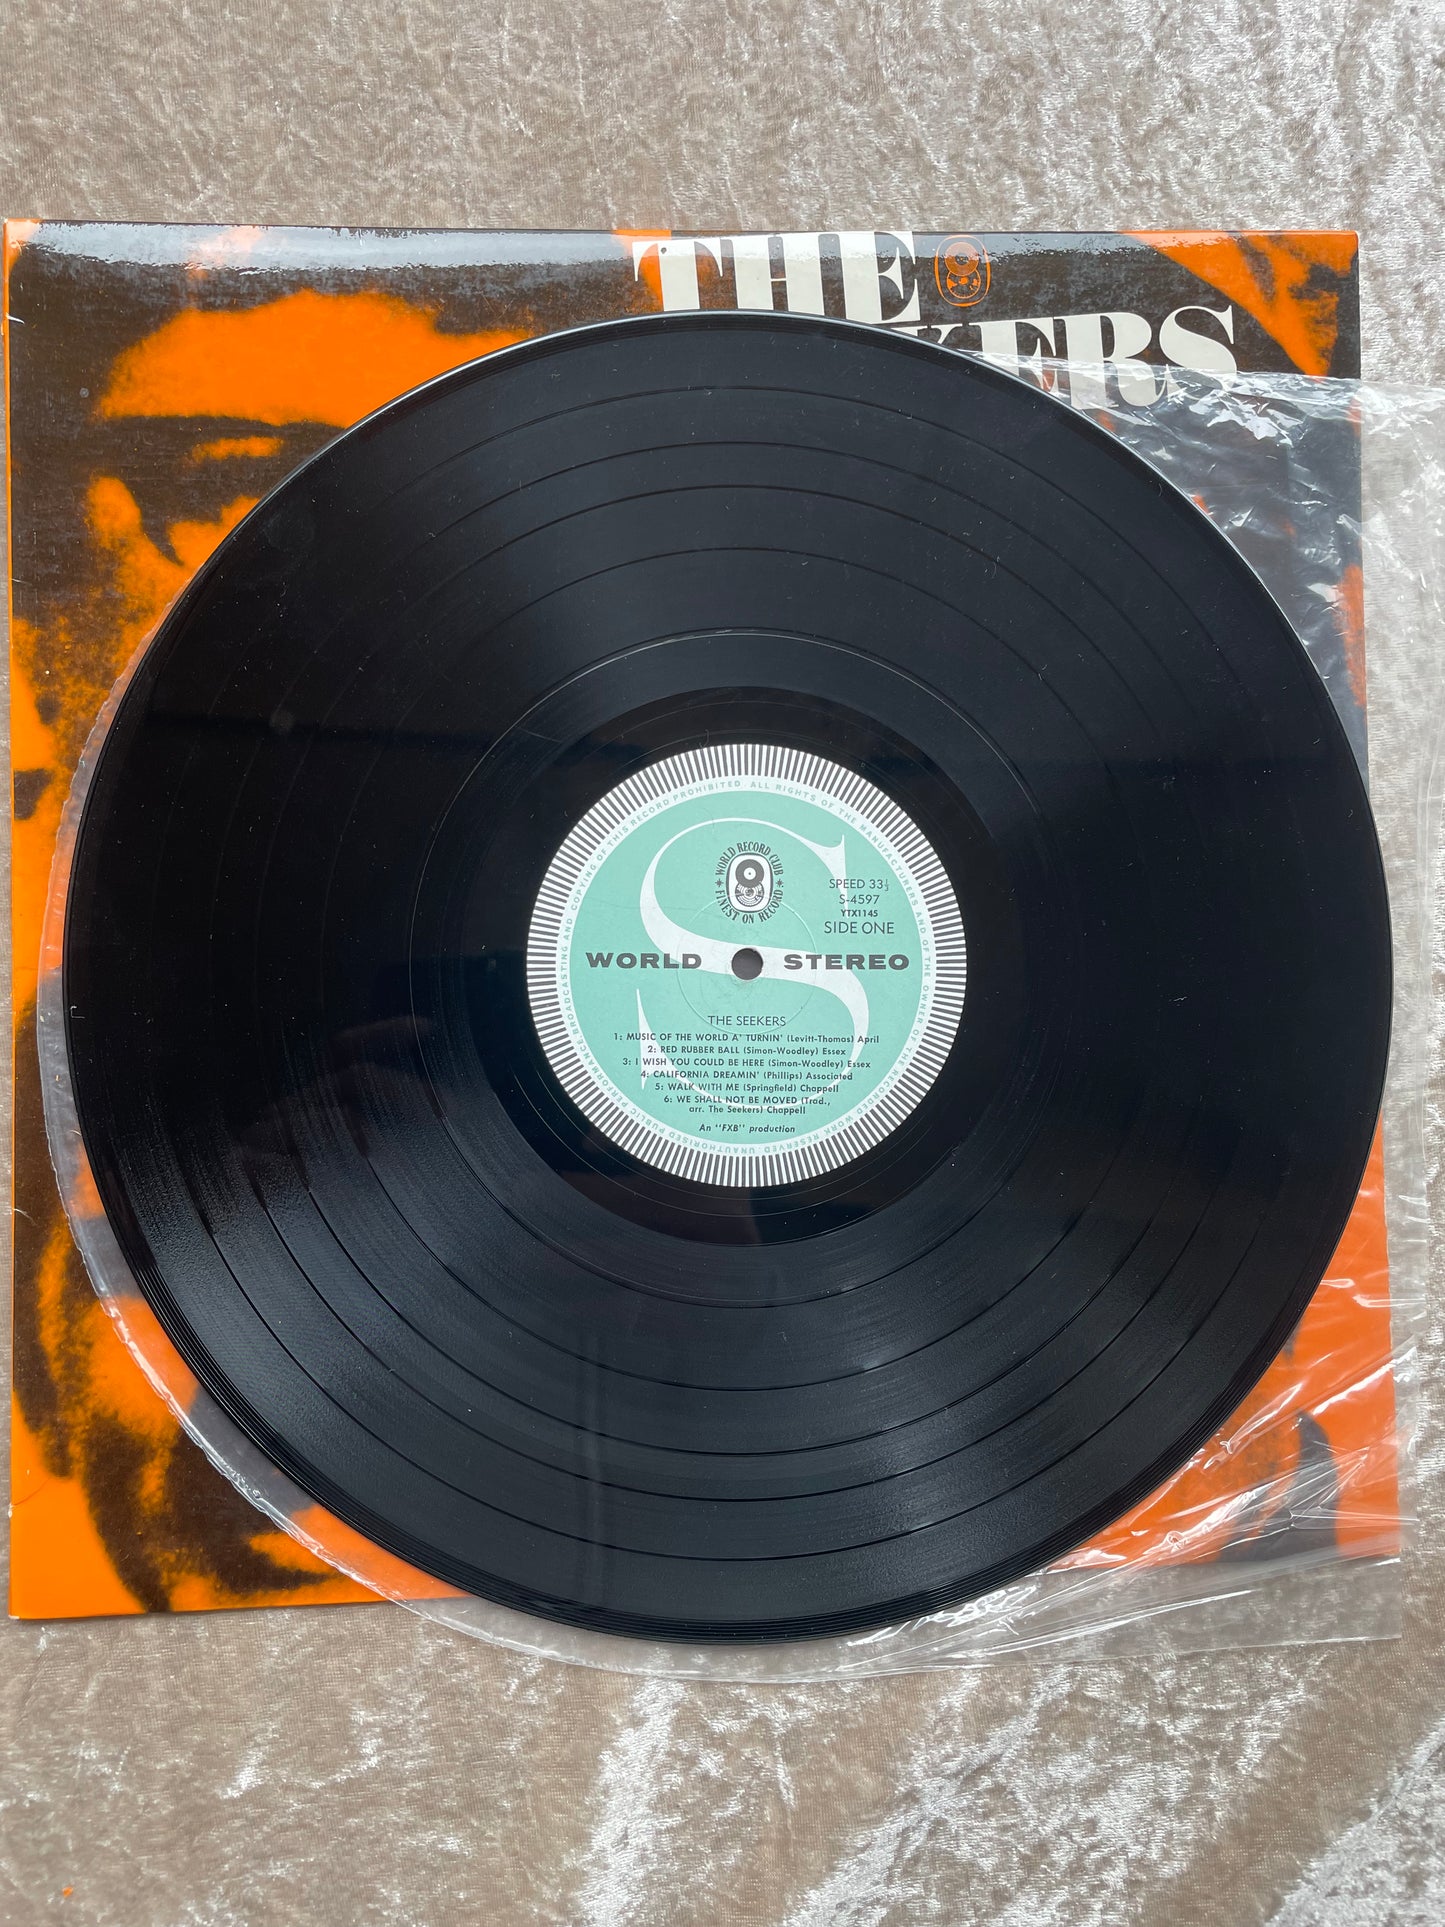 Vinyl Record LP The Seekers 1969